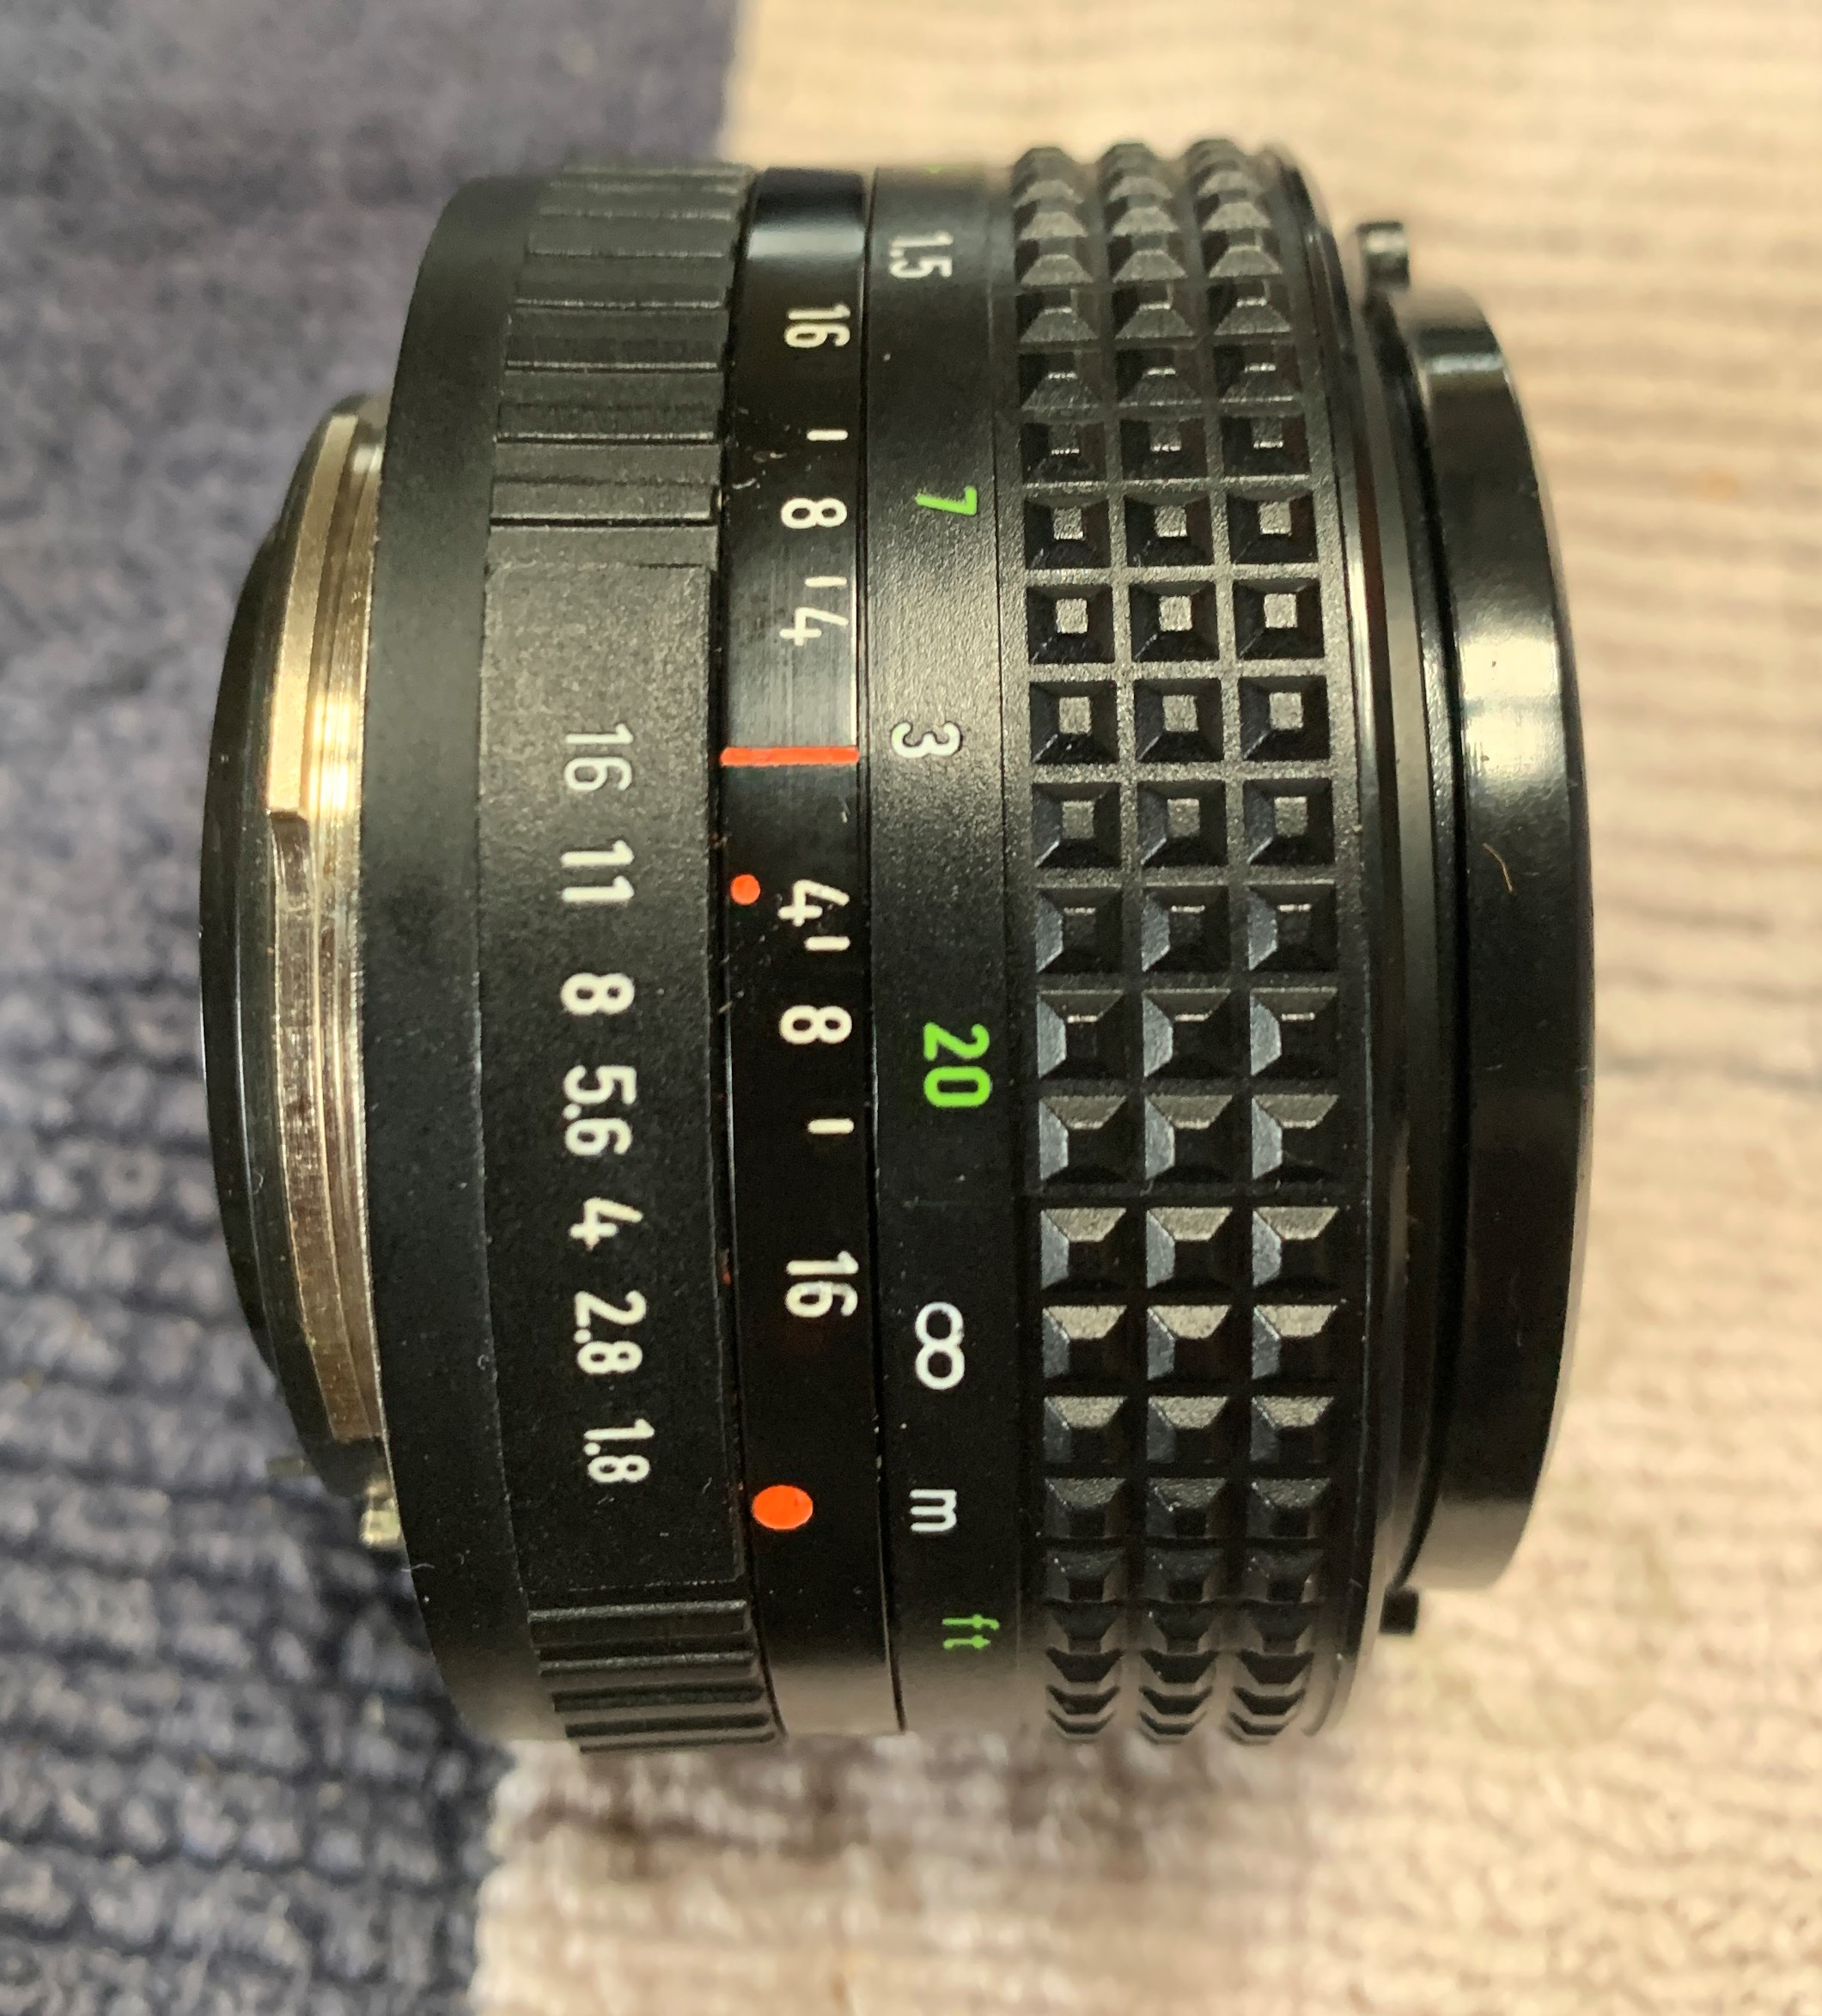 Pentacon Prakticar - What lens is this? Sigma?